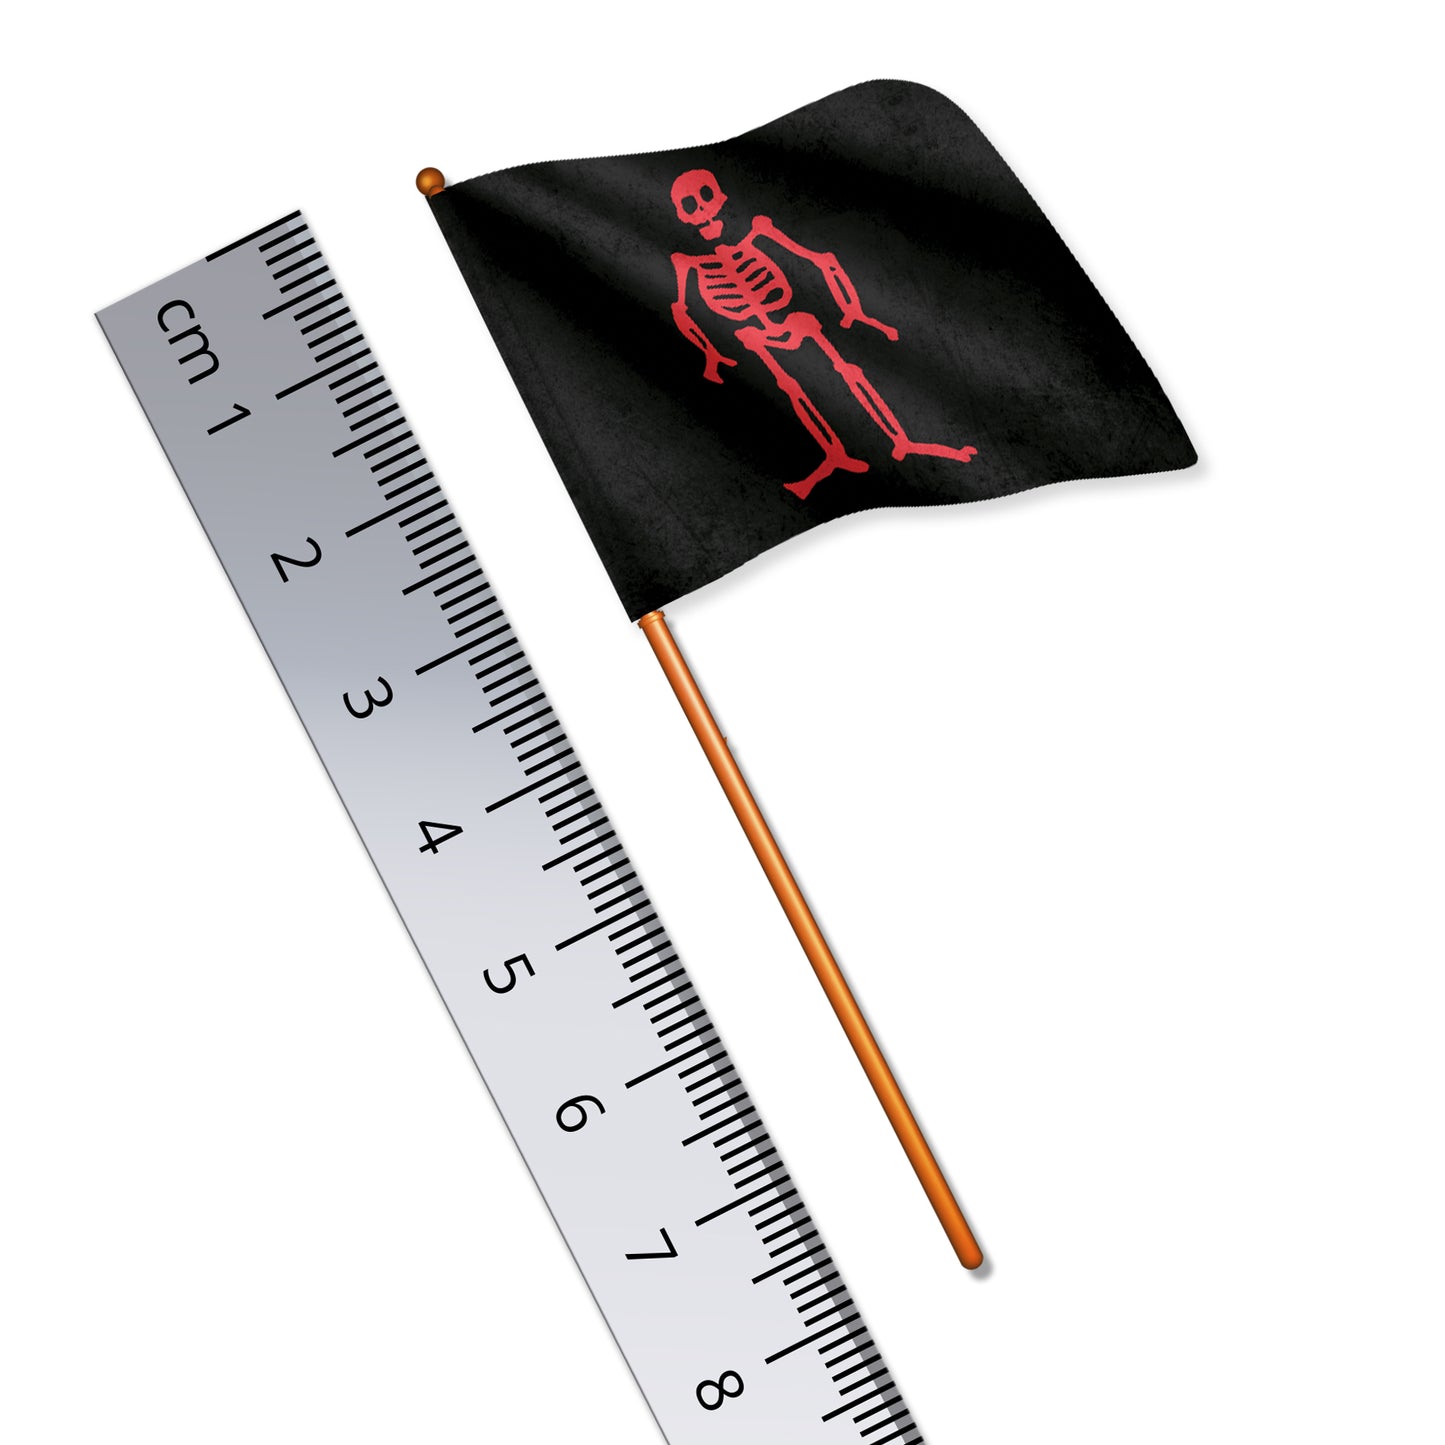 Pirate Flag (Edward Low)